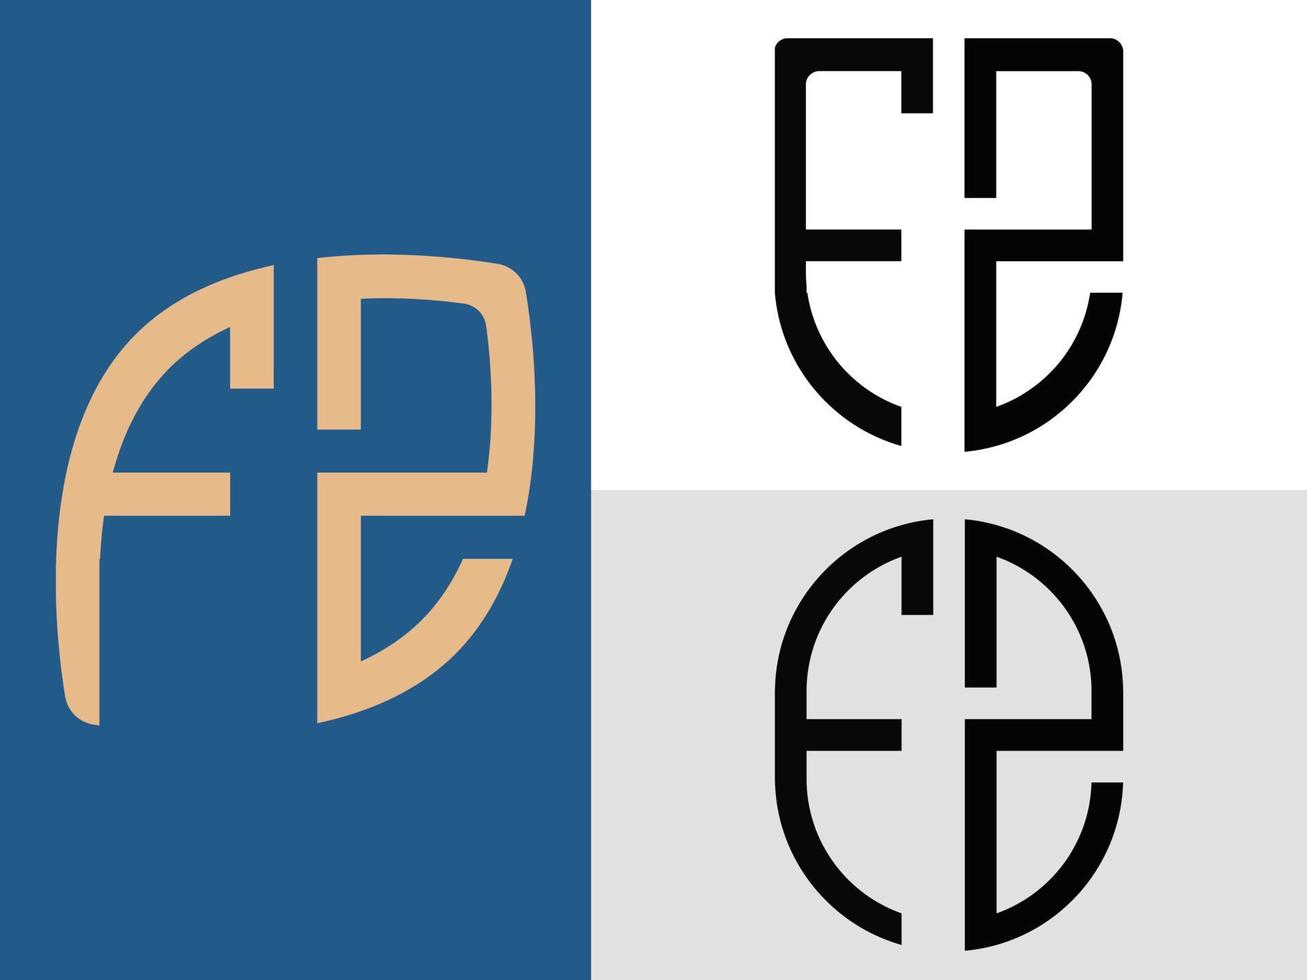 Creative Initial Letters FZ Logo Designs Bundle vector